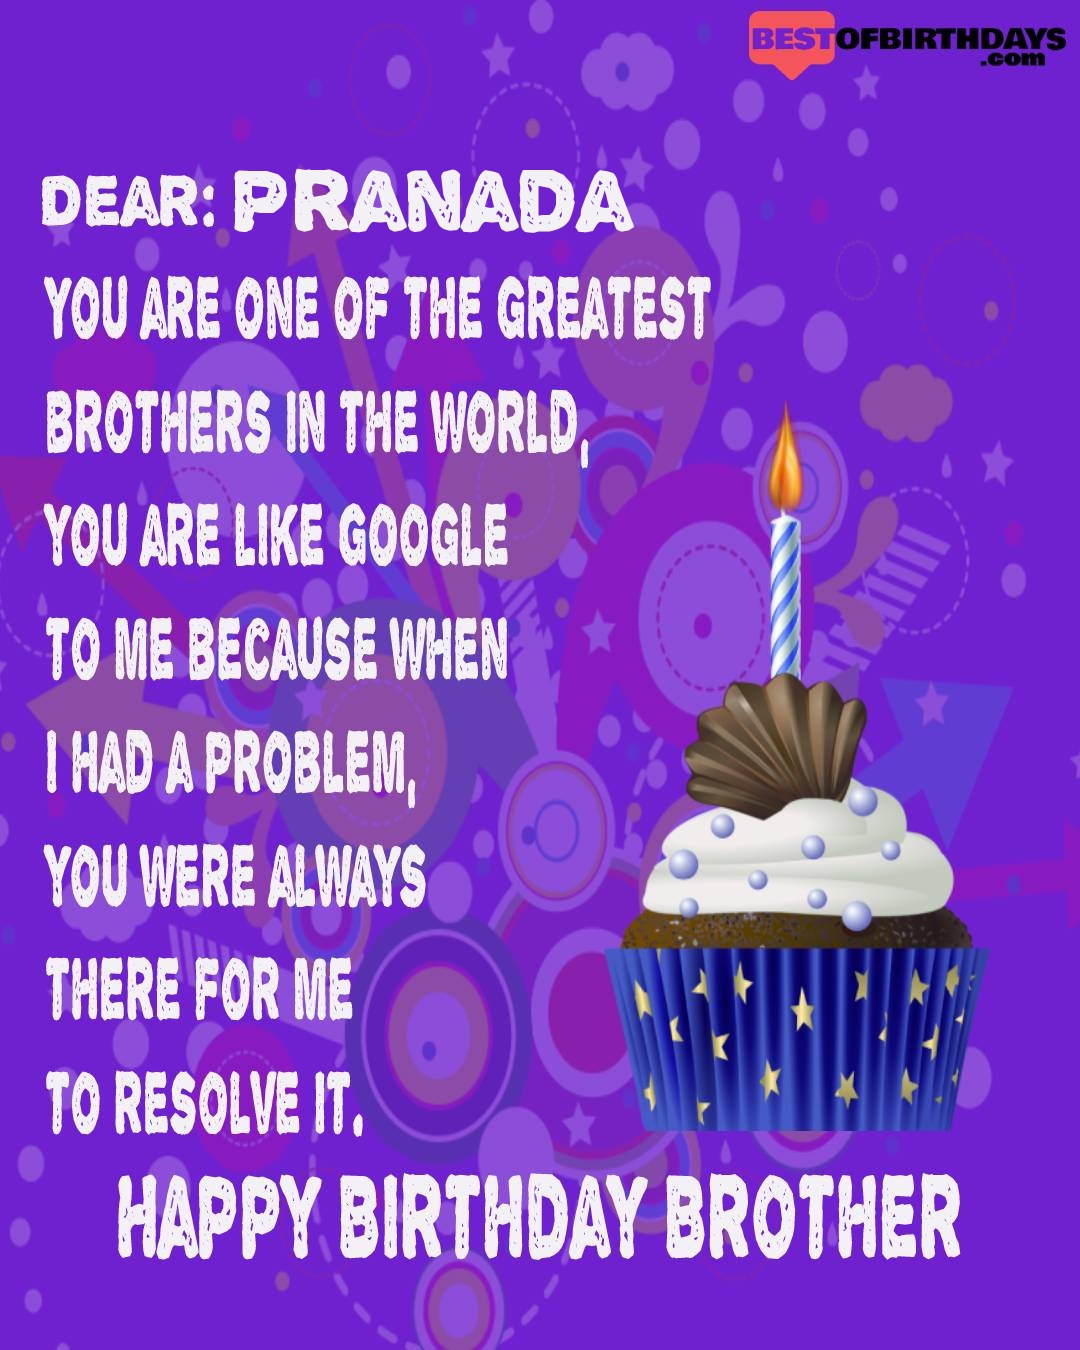 Happy birthday pranada bhai brother bro